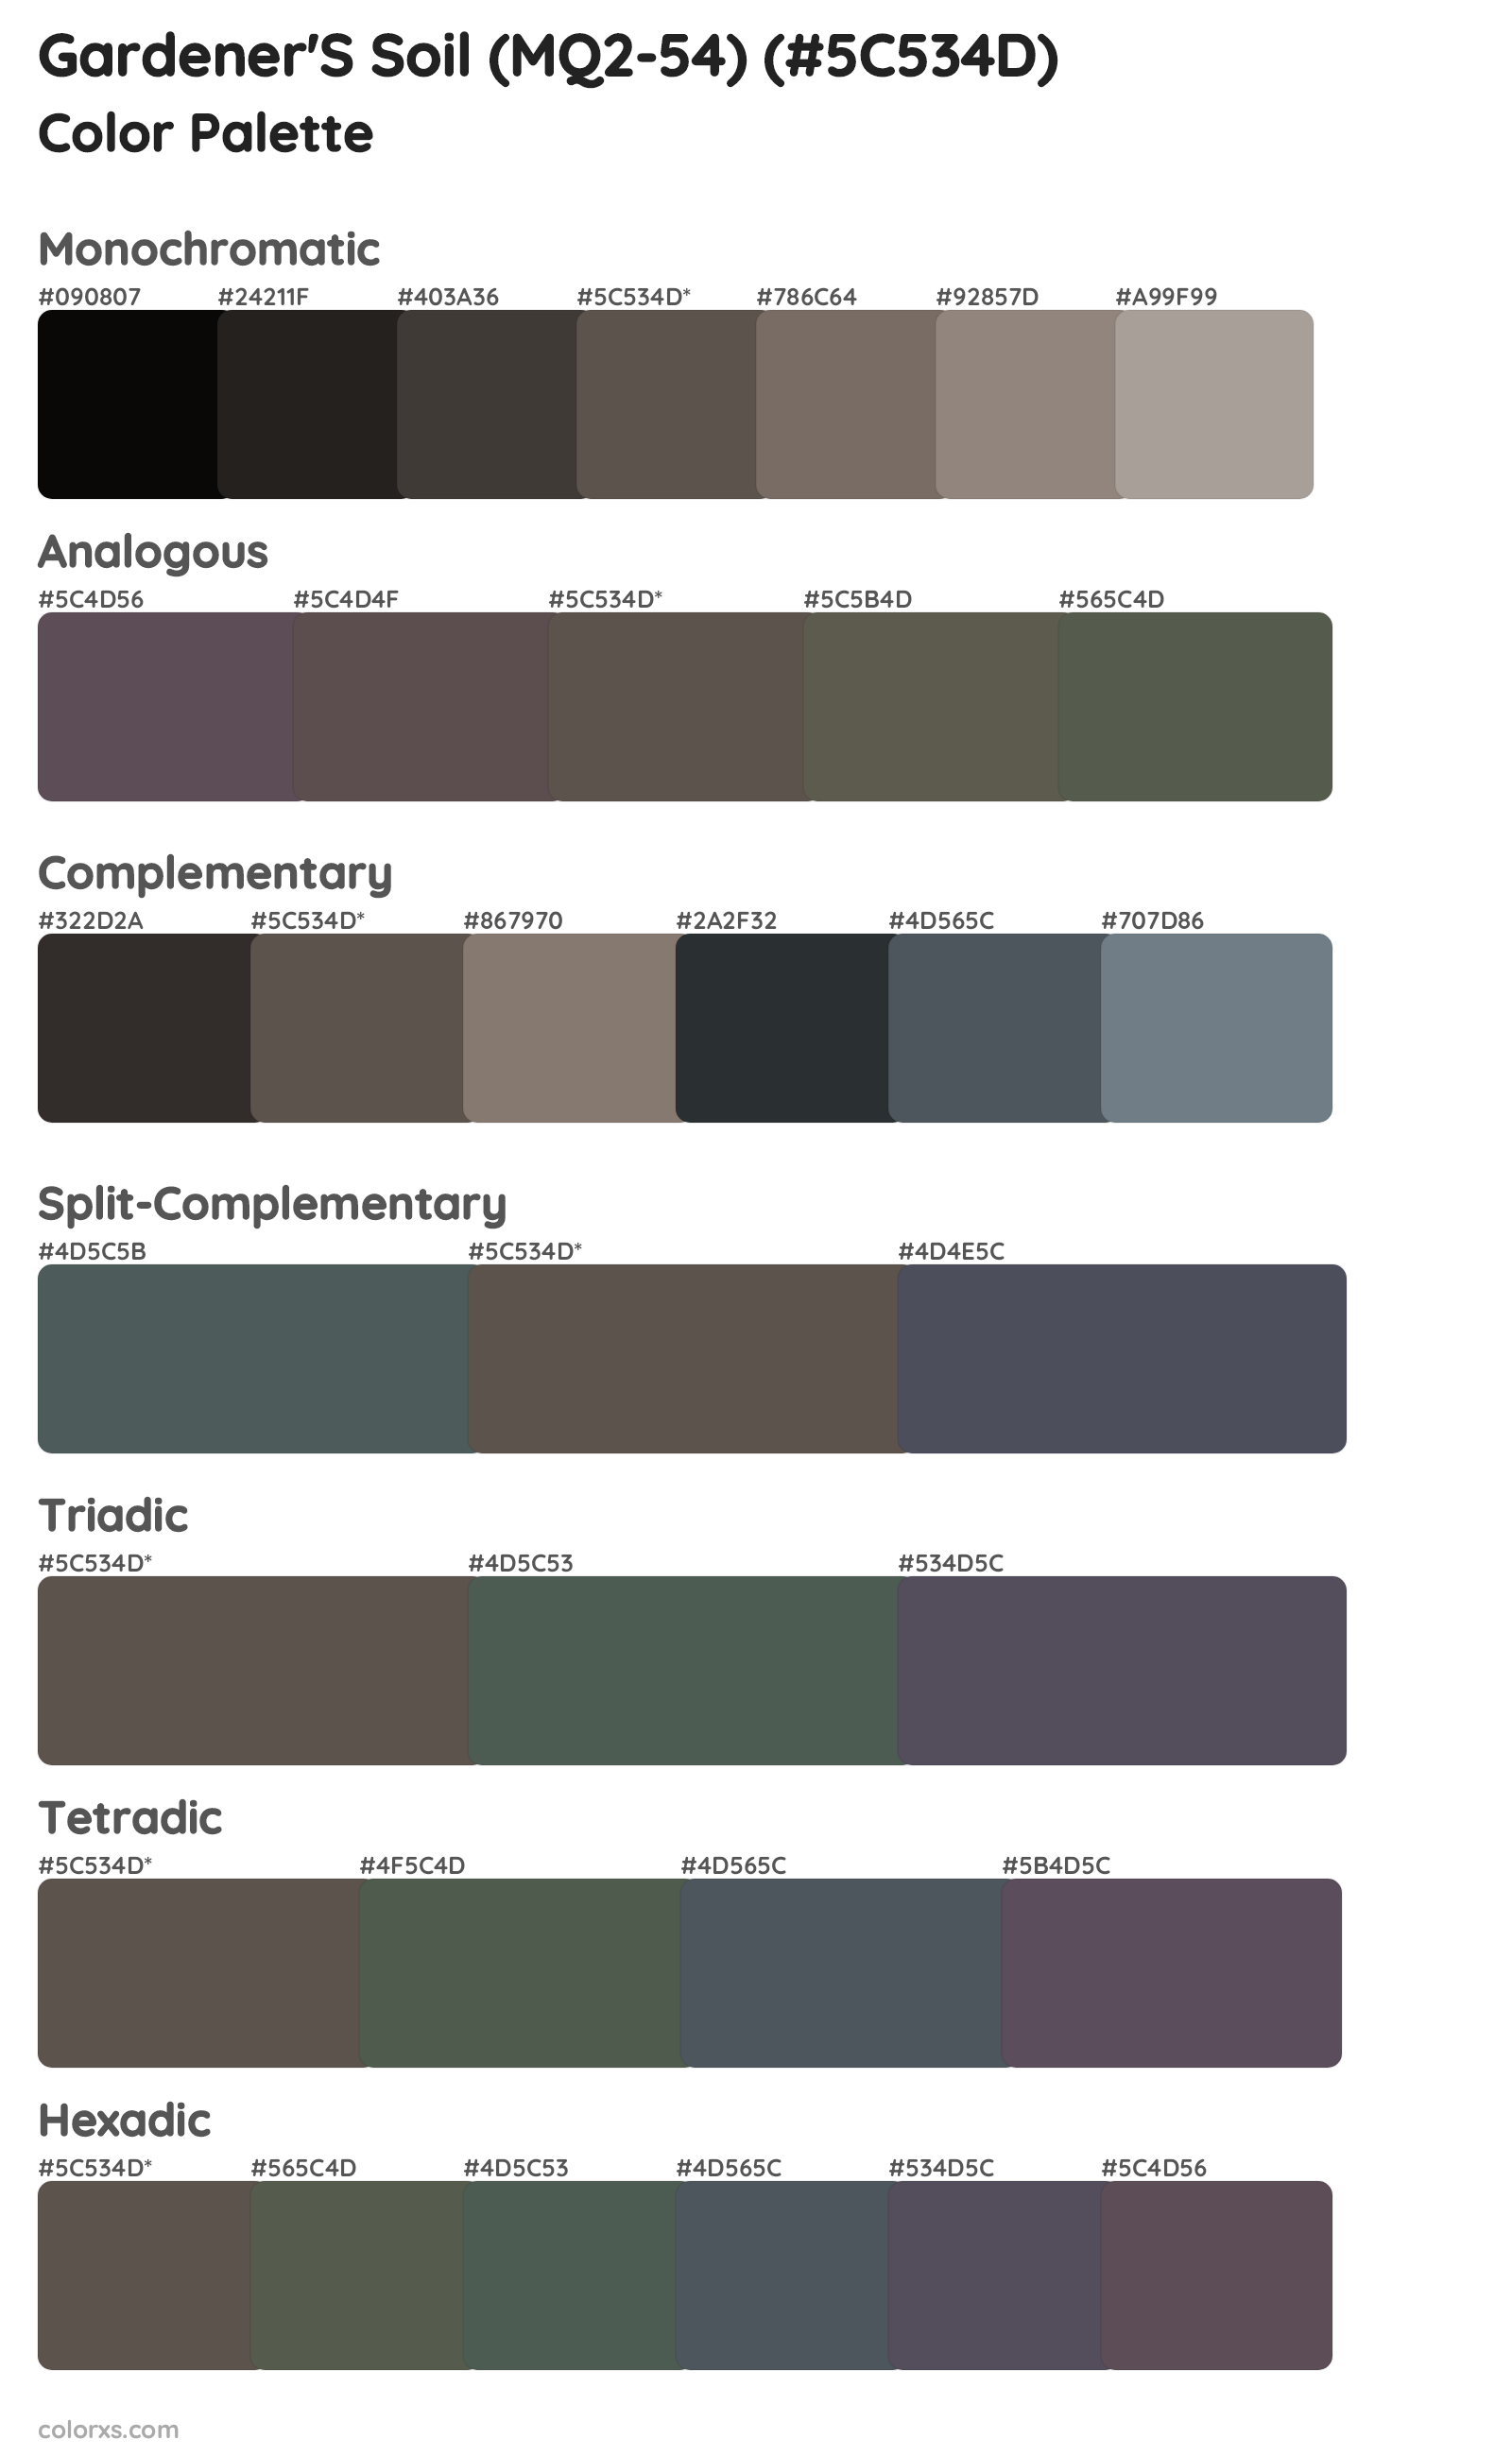 Gardener'S Soil (MQ2-54) Color Scheme Palettes